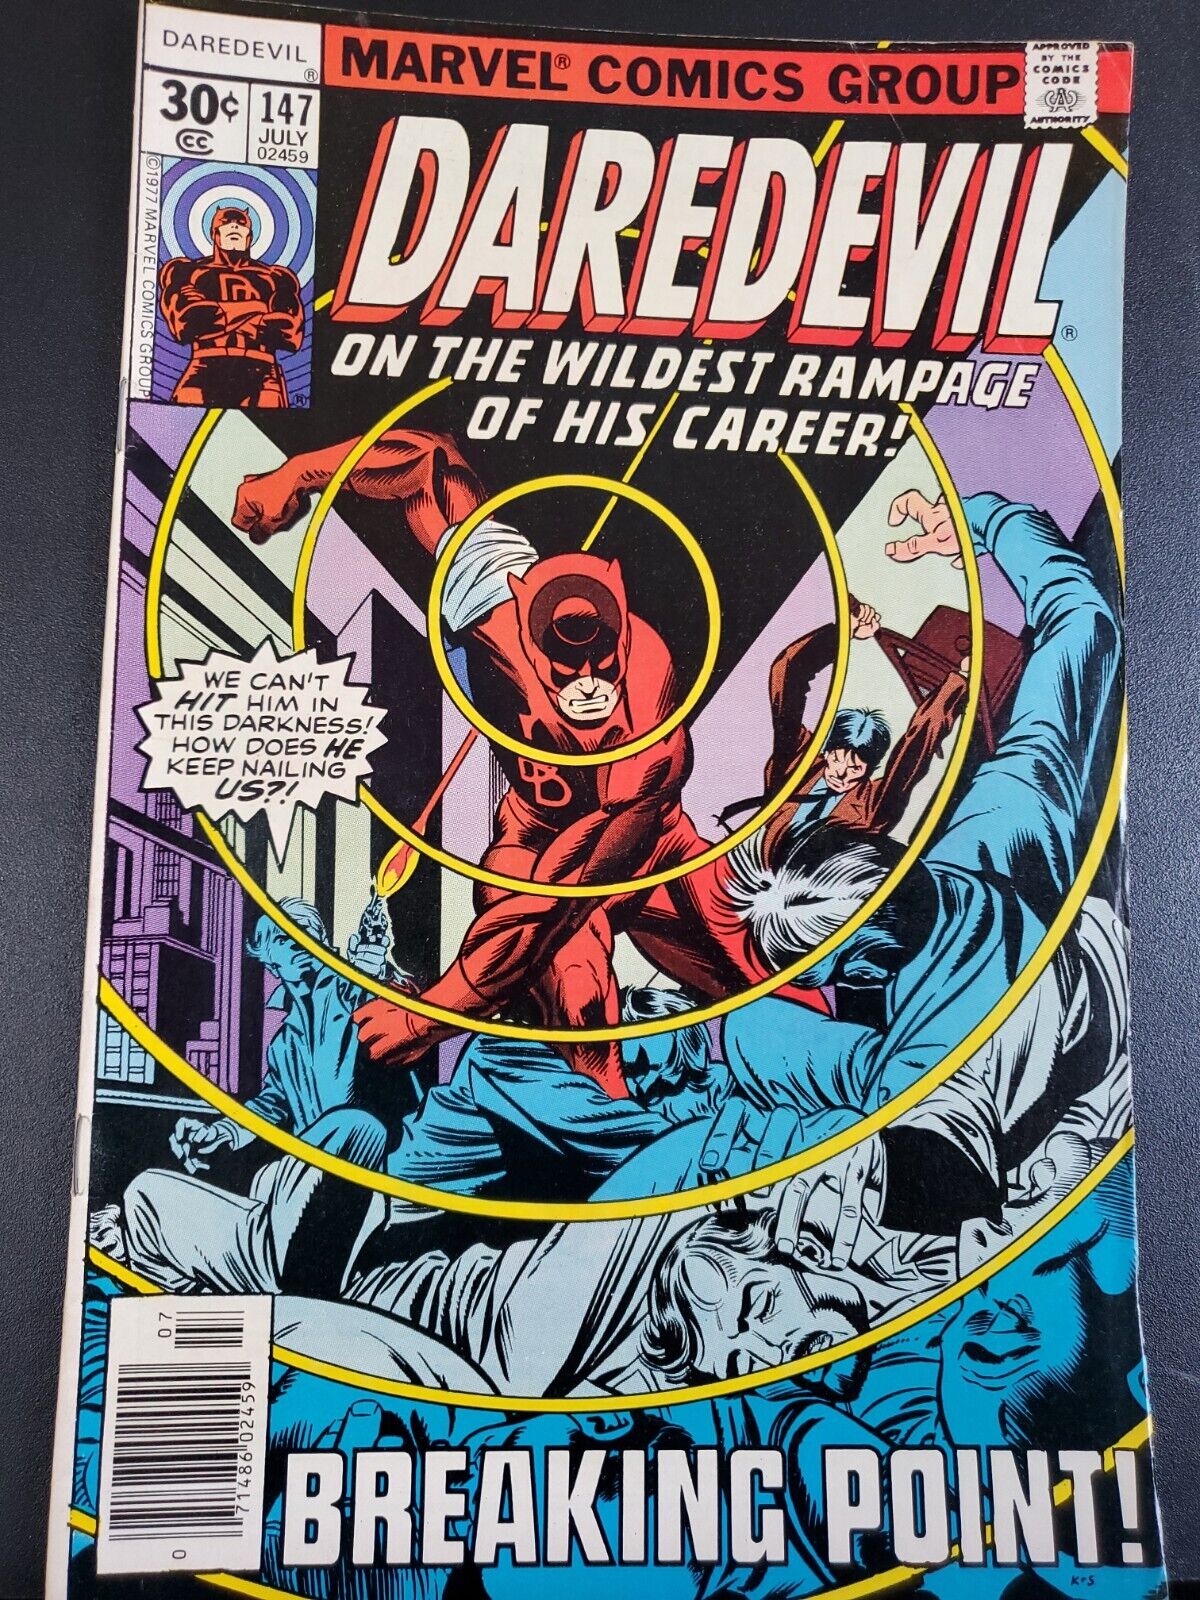 Daredevil #147 #148#149#150#151#152 Year 1977 & 1978